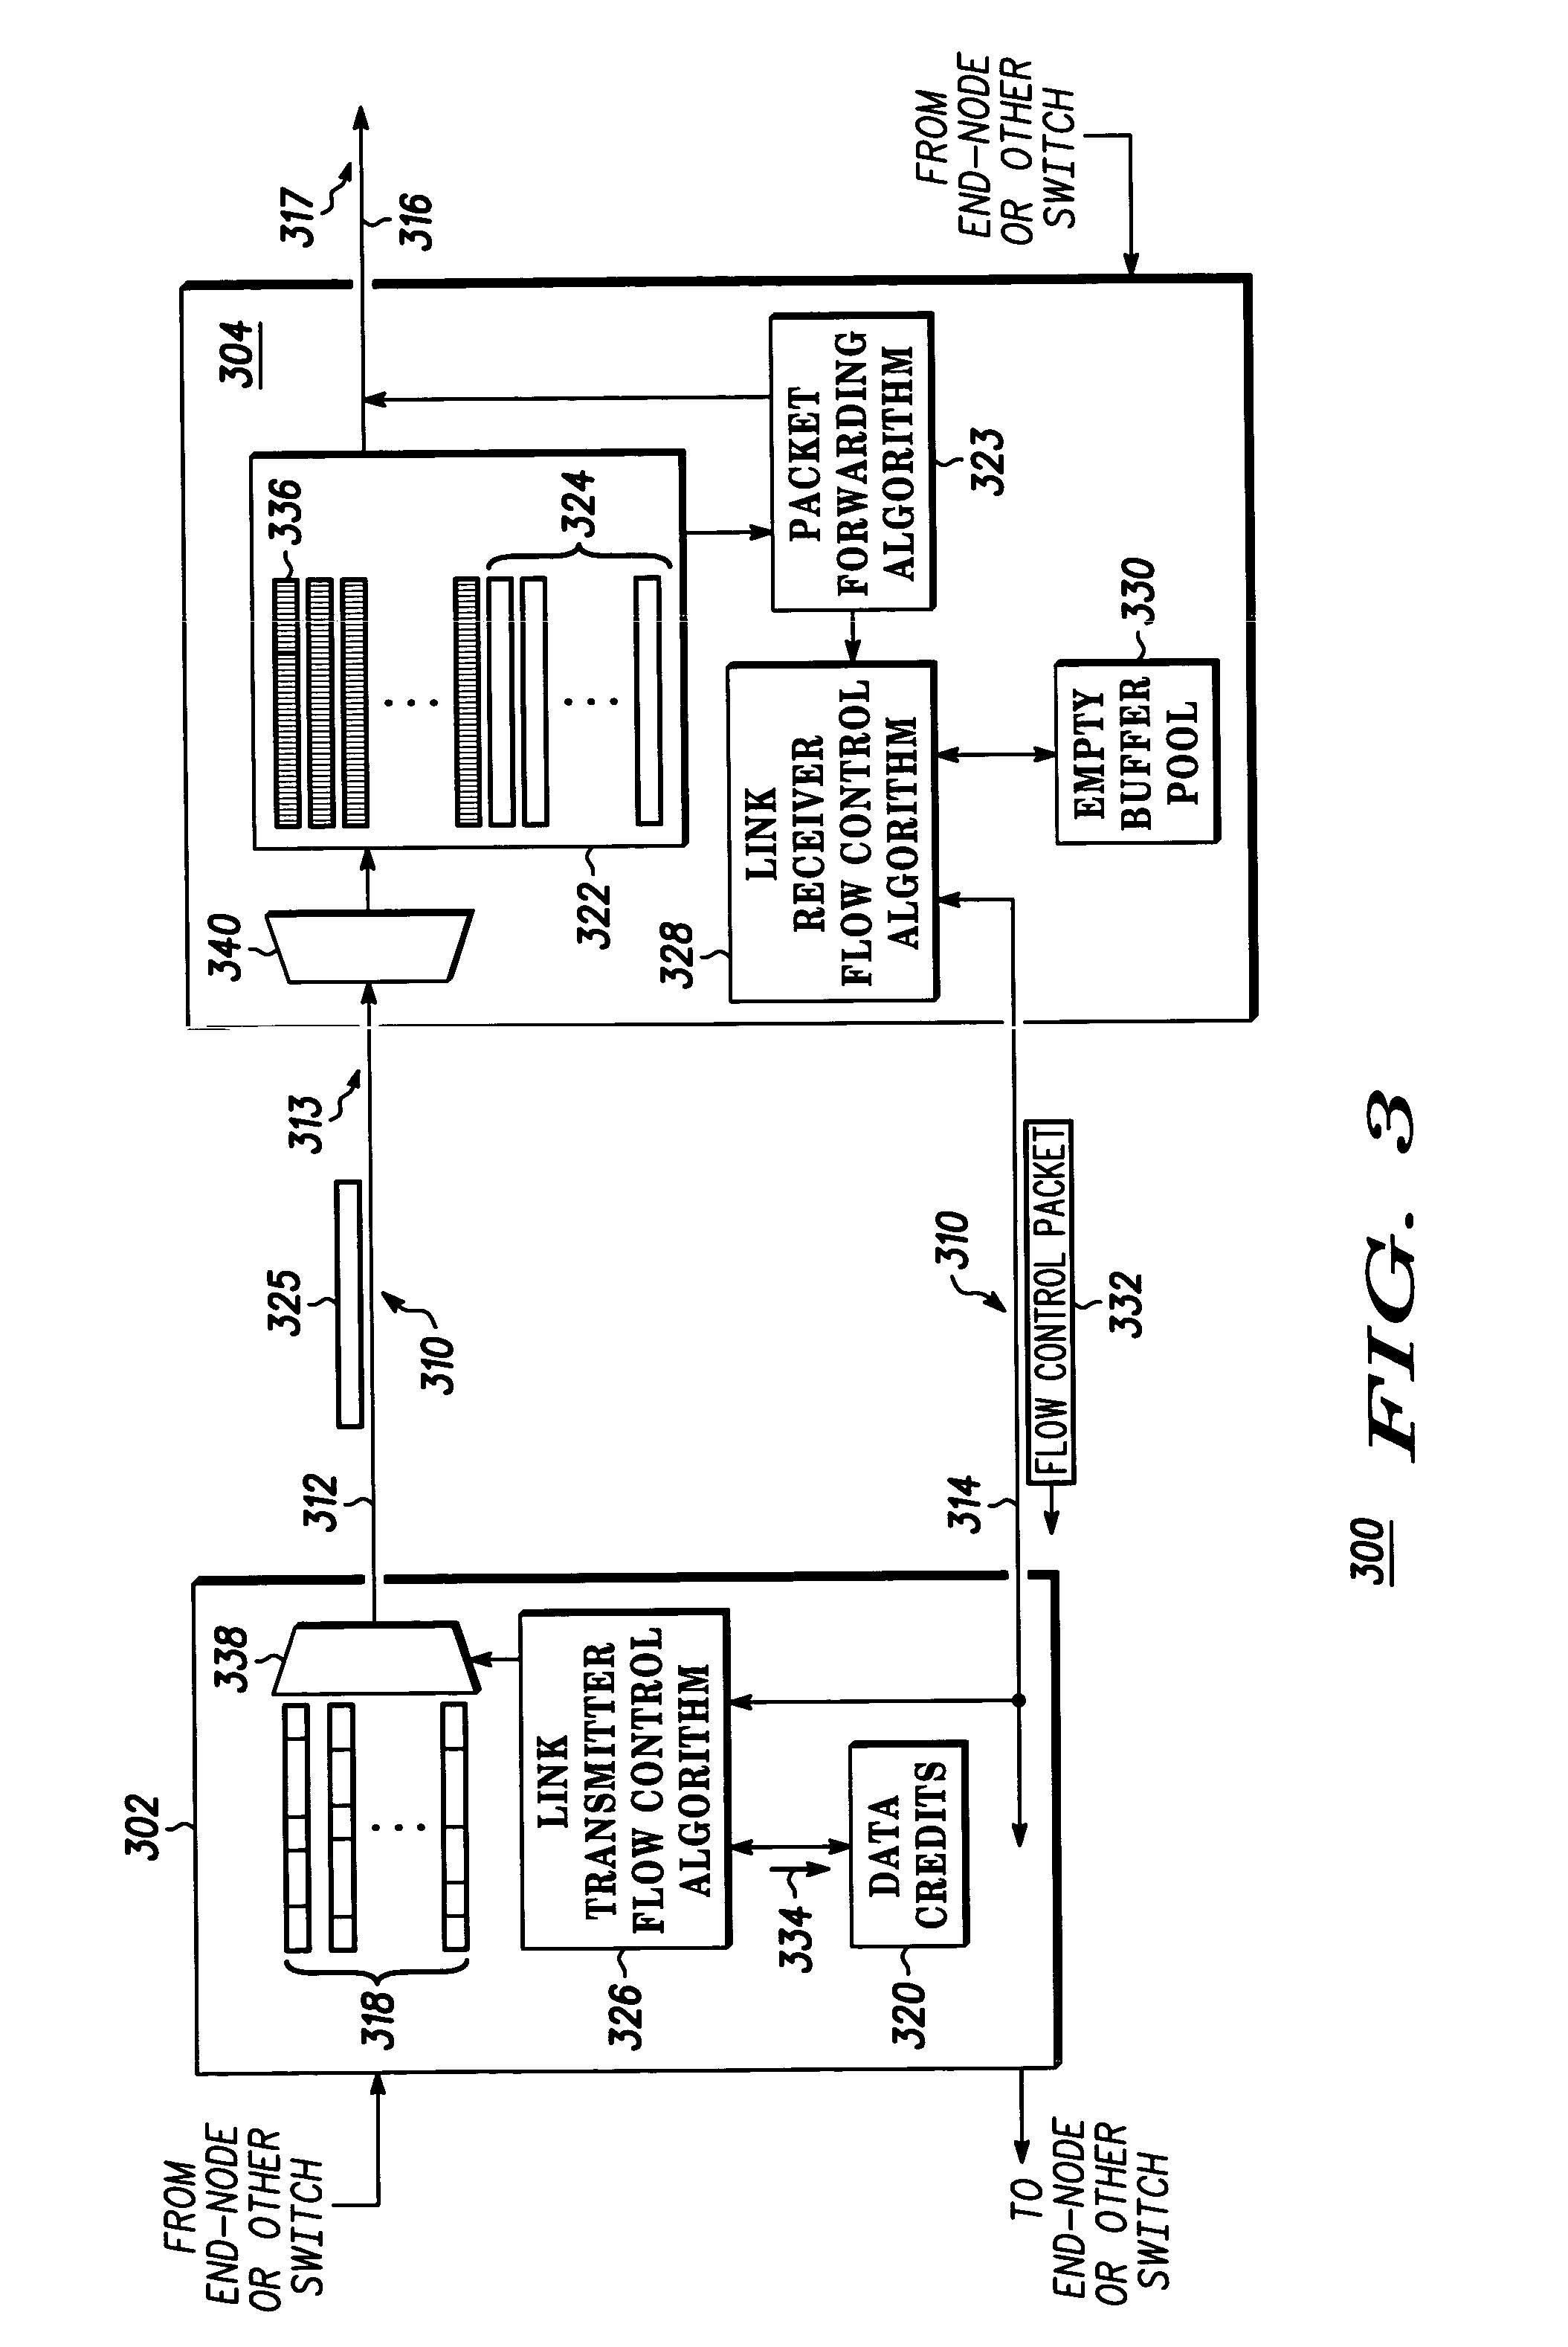 Method of transmitter oriented link flow control